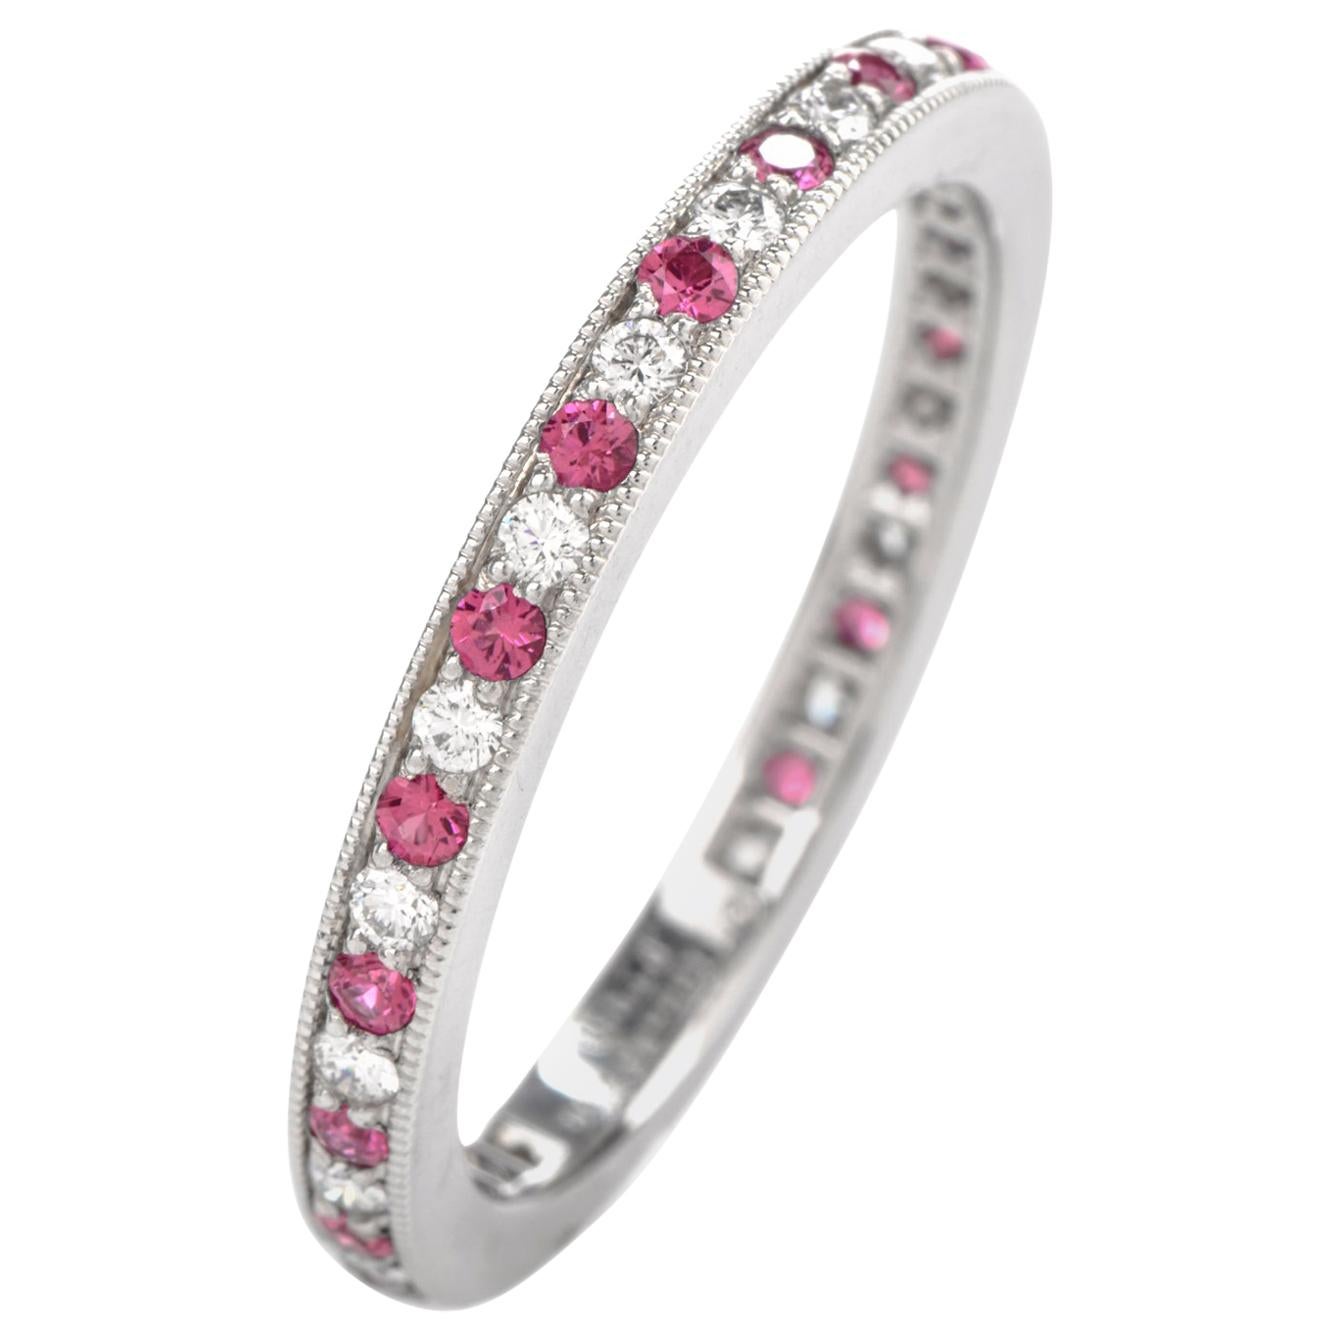 Tiffany & Co. Legacy Platinum Diamond and Pink Sapphire Band Retail $3100